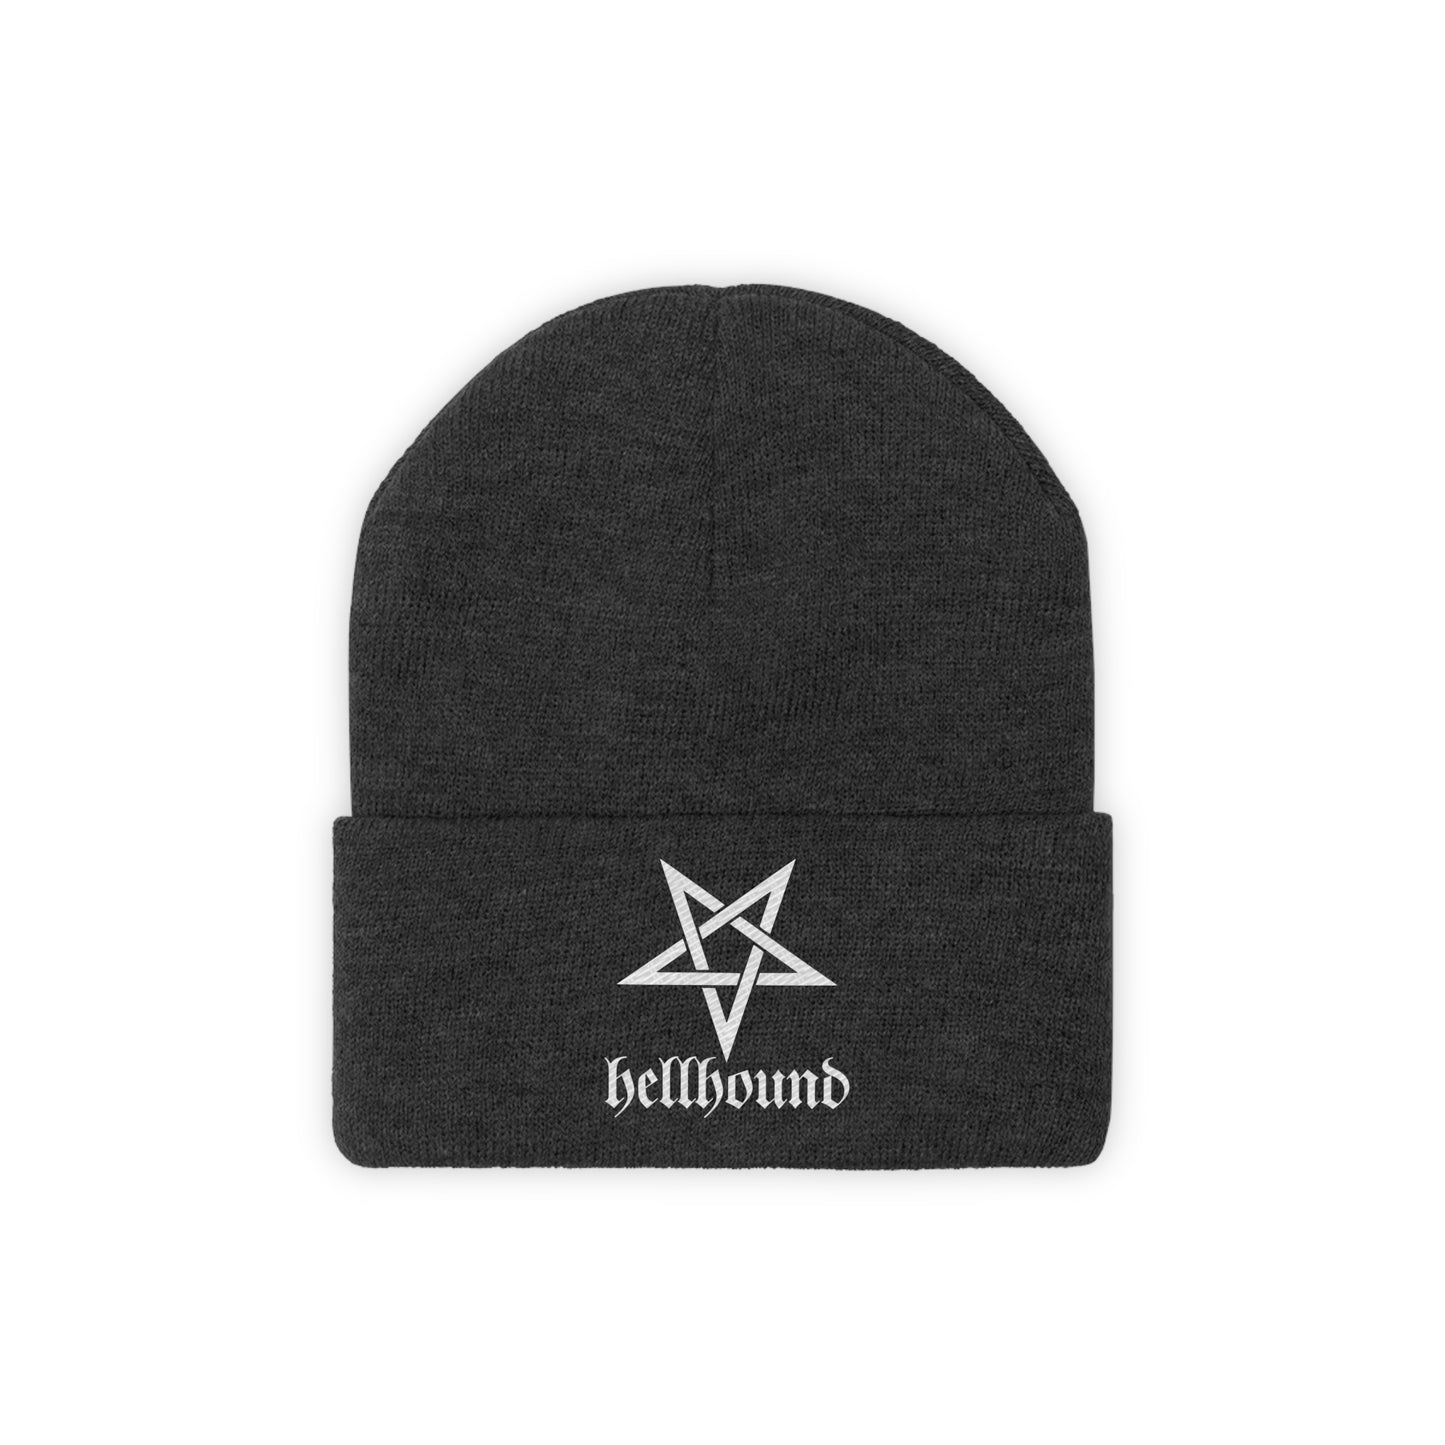 Hellhound Pentagram Beanie by Hellhound Clothing